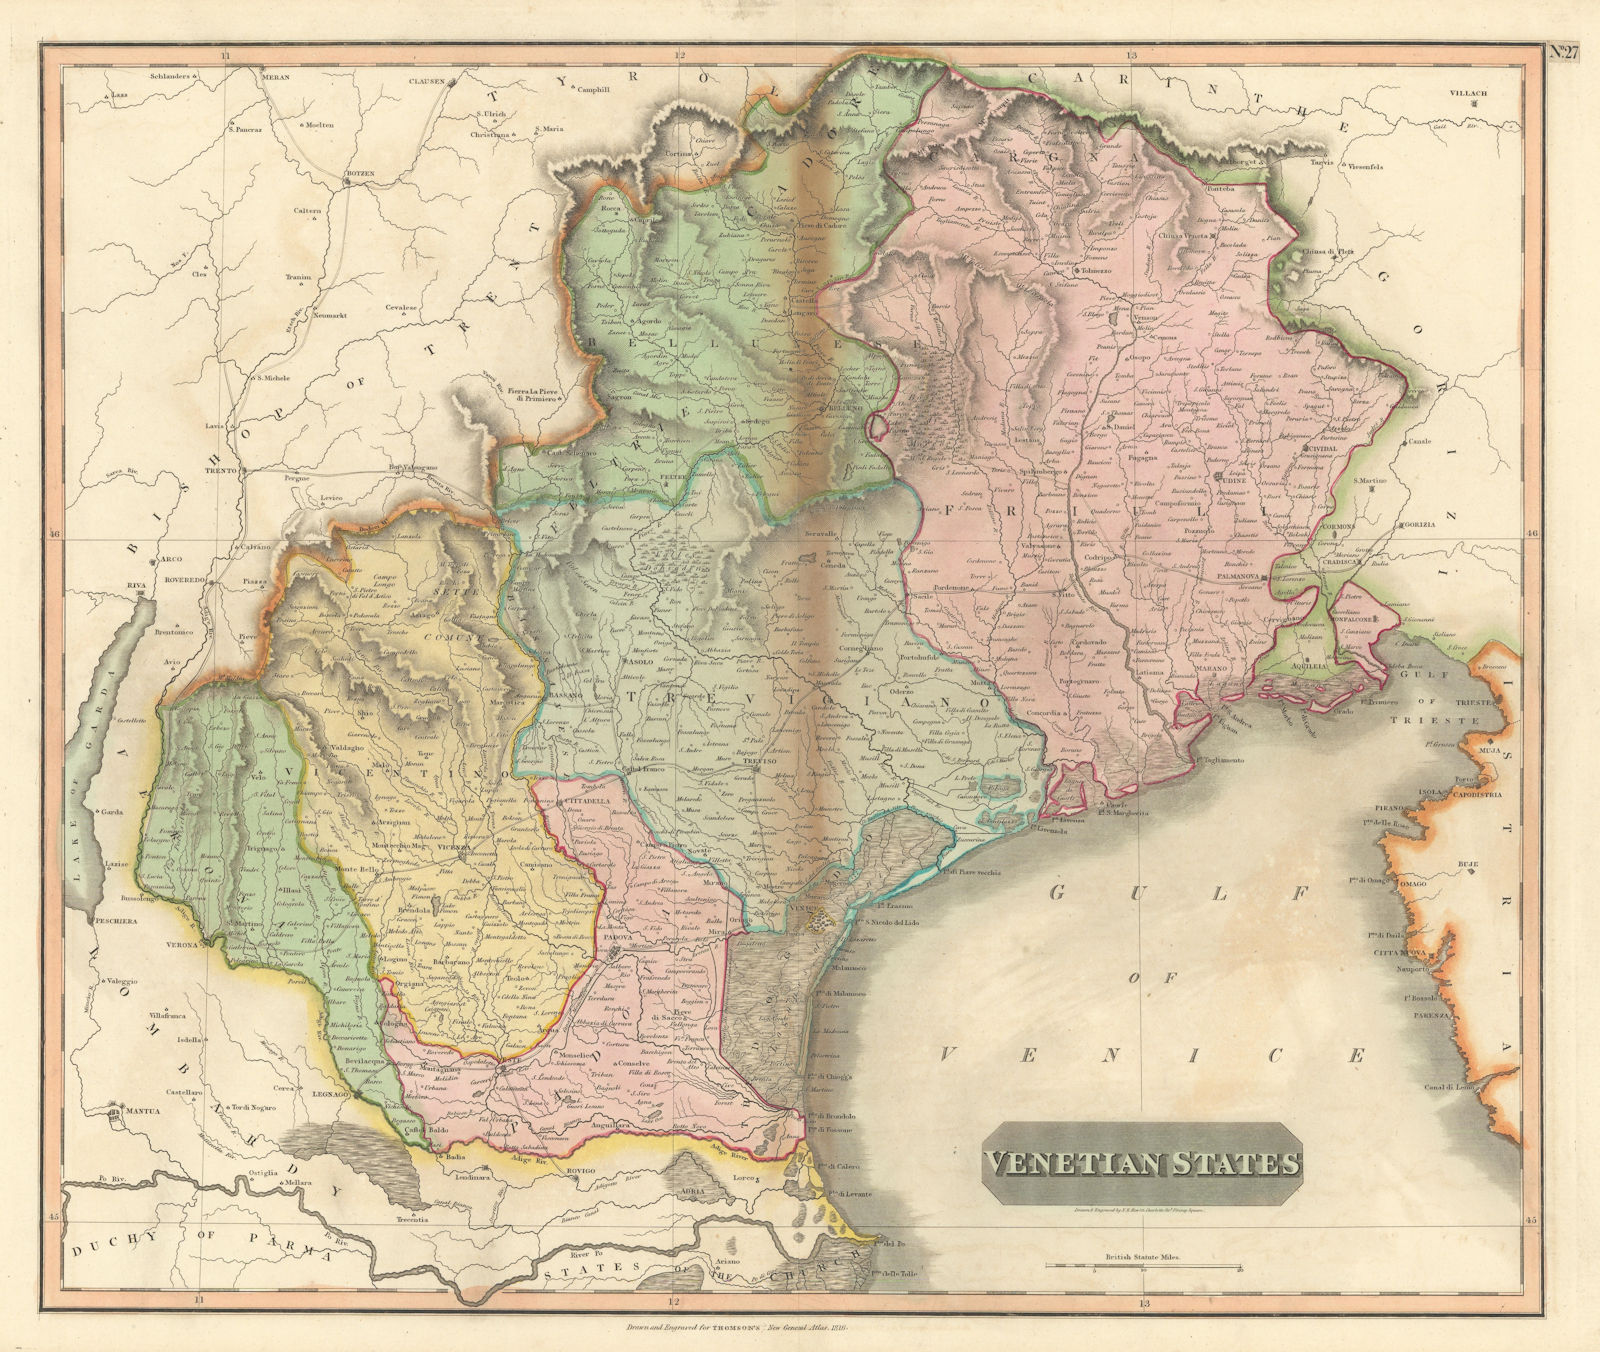 "Venetian States". Republic of Venice, Italy. Veneto & Friuli. THOMSON 1817 map